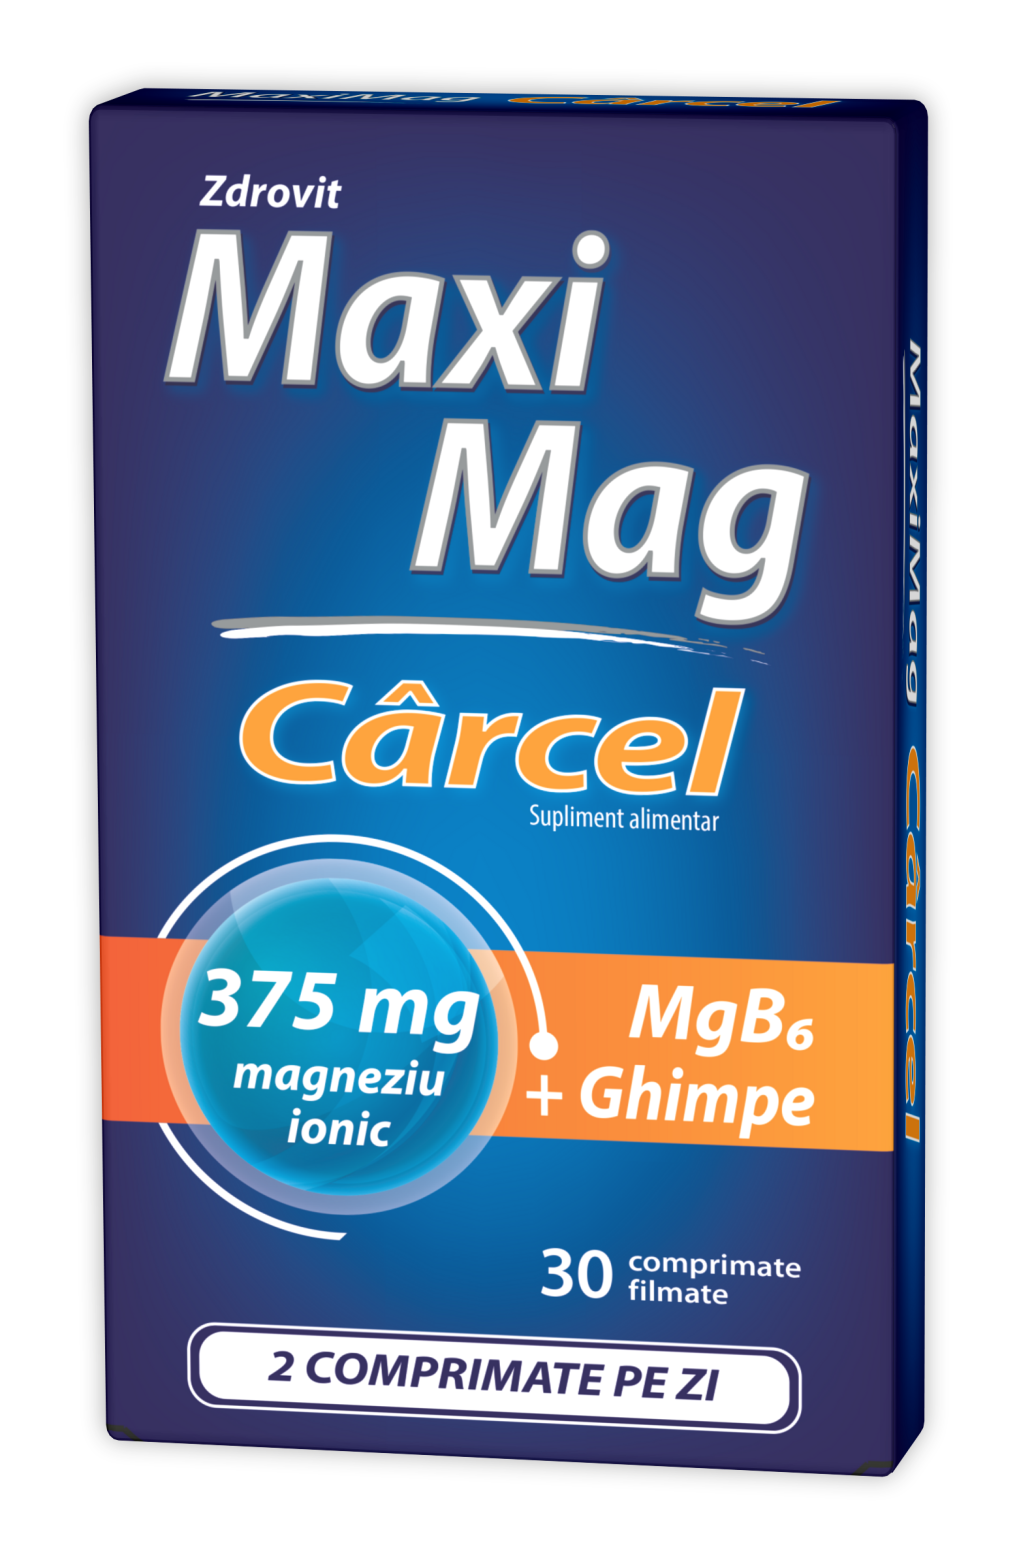 Suplimente cu magneziu - Maximag Carcel *30 cpr (Zdrovit), epastila.ro